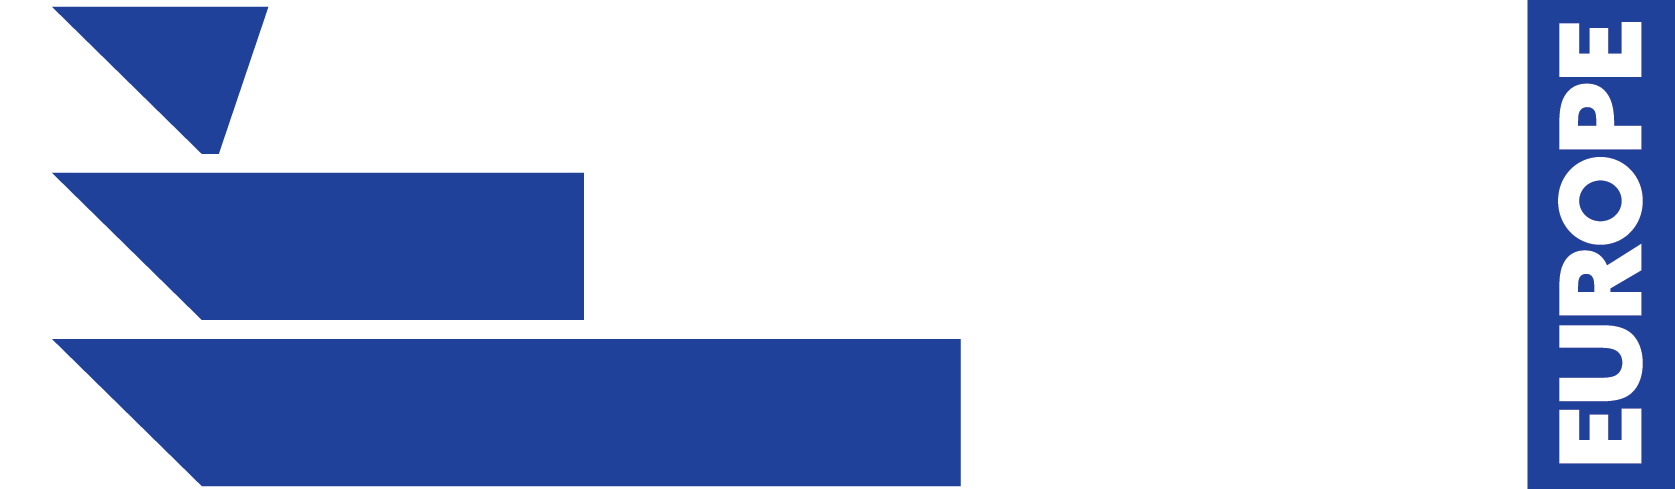 Adhesives & Bonding Expo Europe Logo